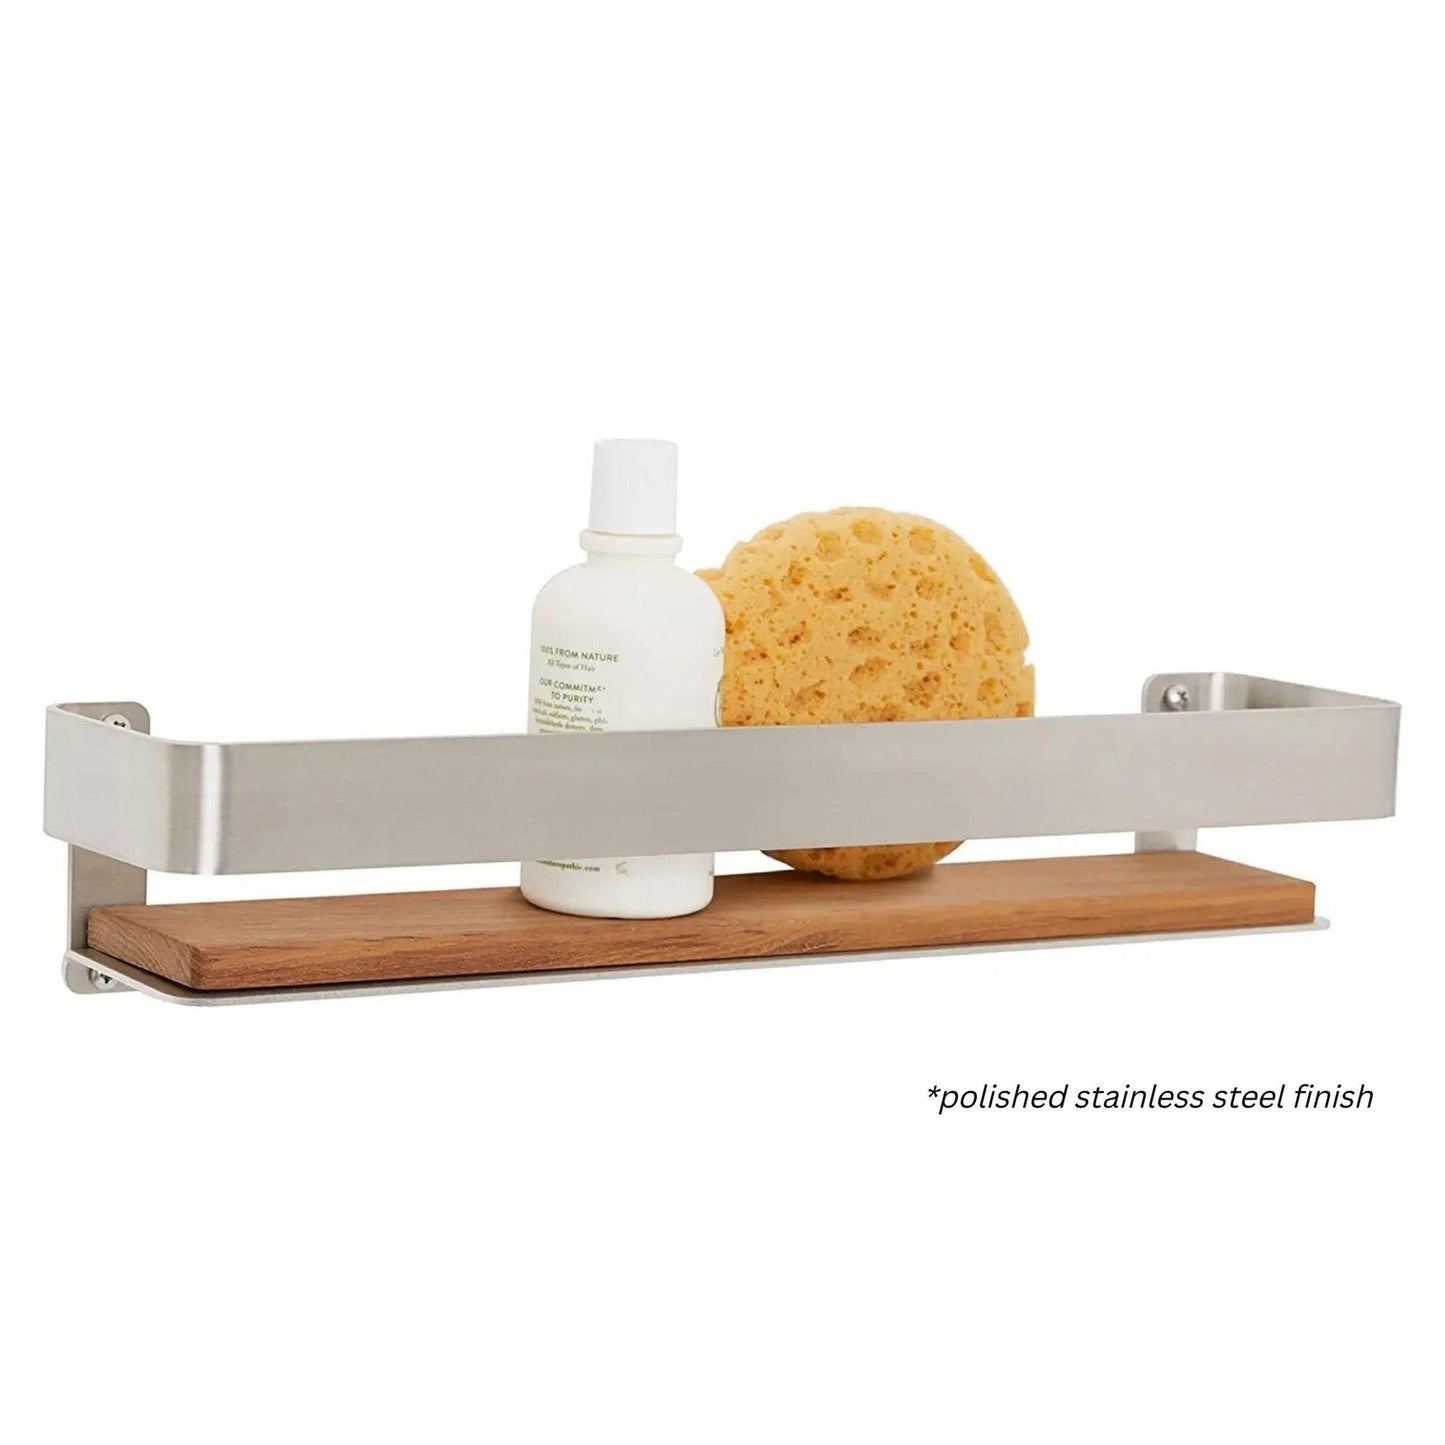 Seachrome Coronado 700 Series 18" x 4" Rectangular Shower Shelf With Rail in Satin Brass Powder Coated Finish Stainless Steel and Natural Teak Wood Insert